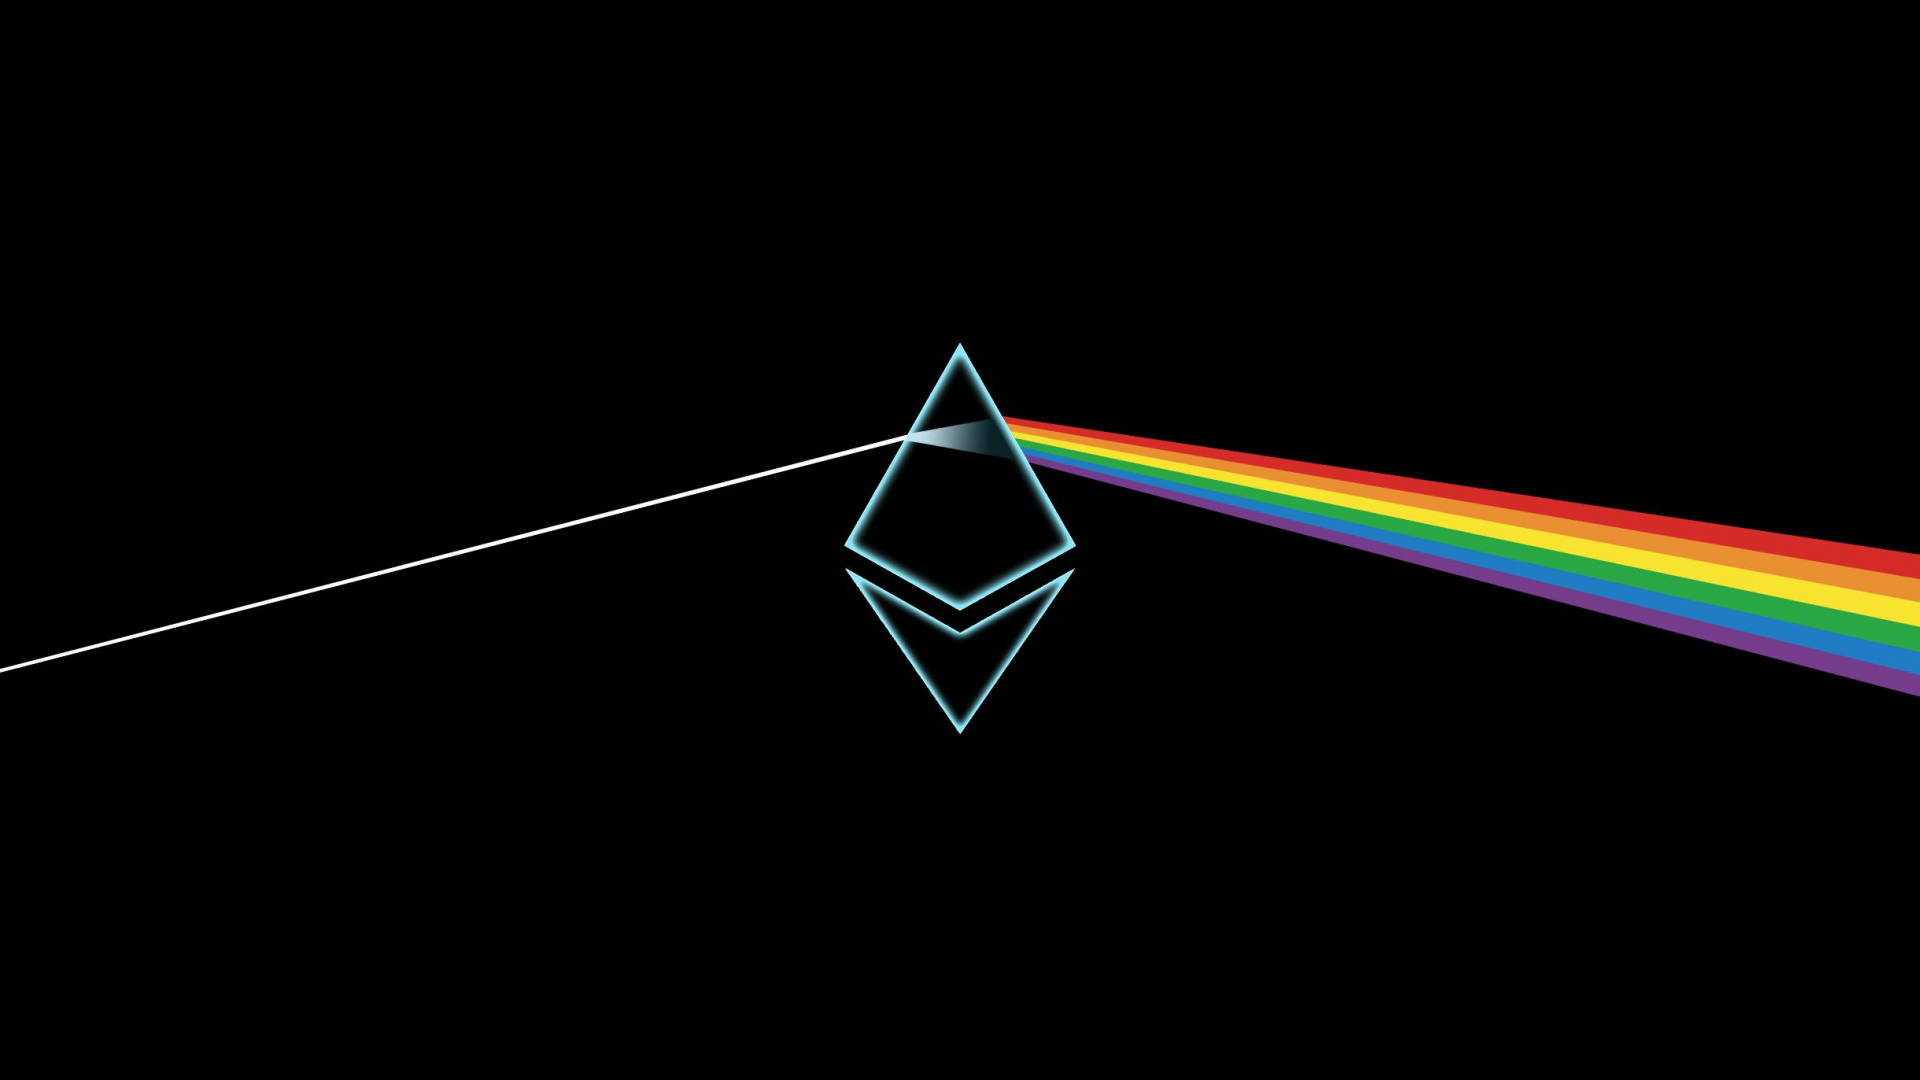 Ethereum Pink Floyd inspireret Wallpaper